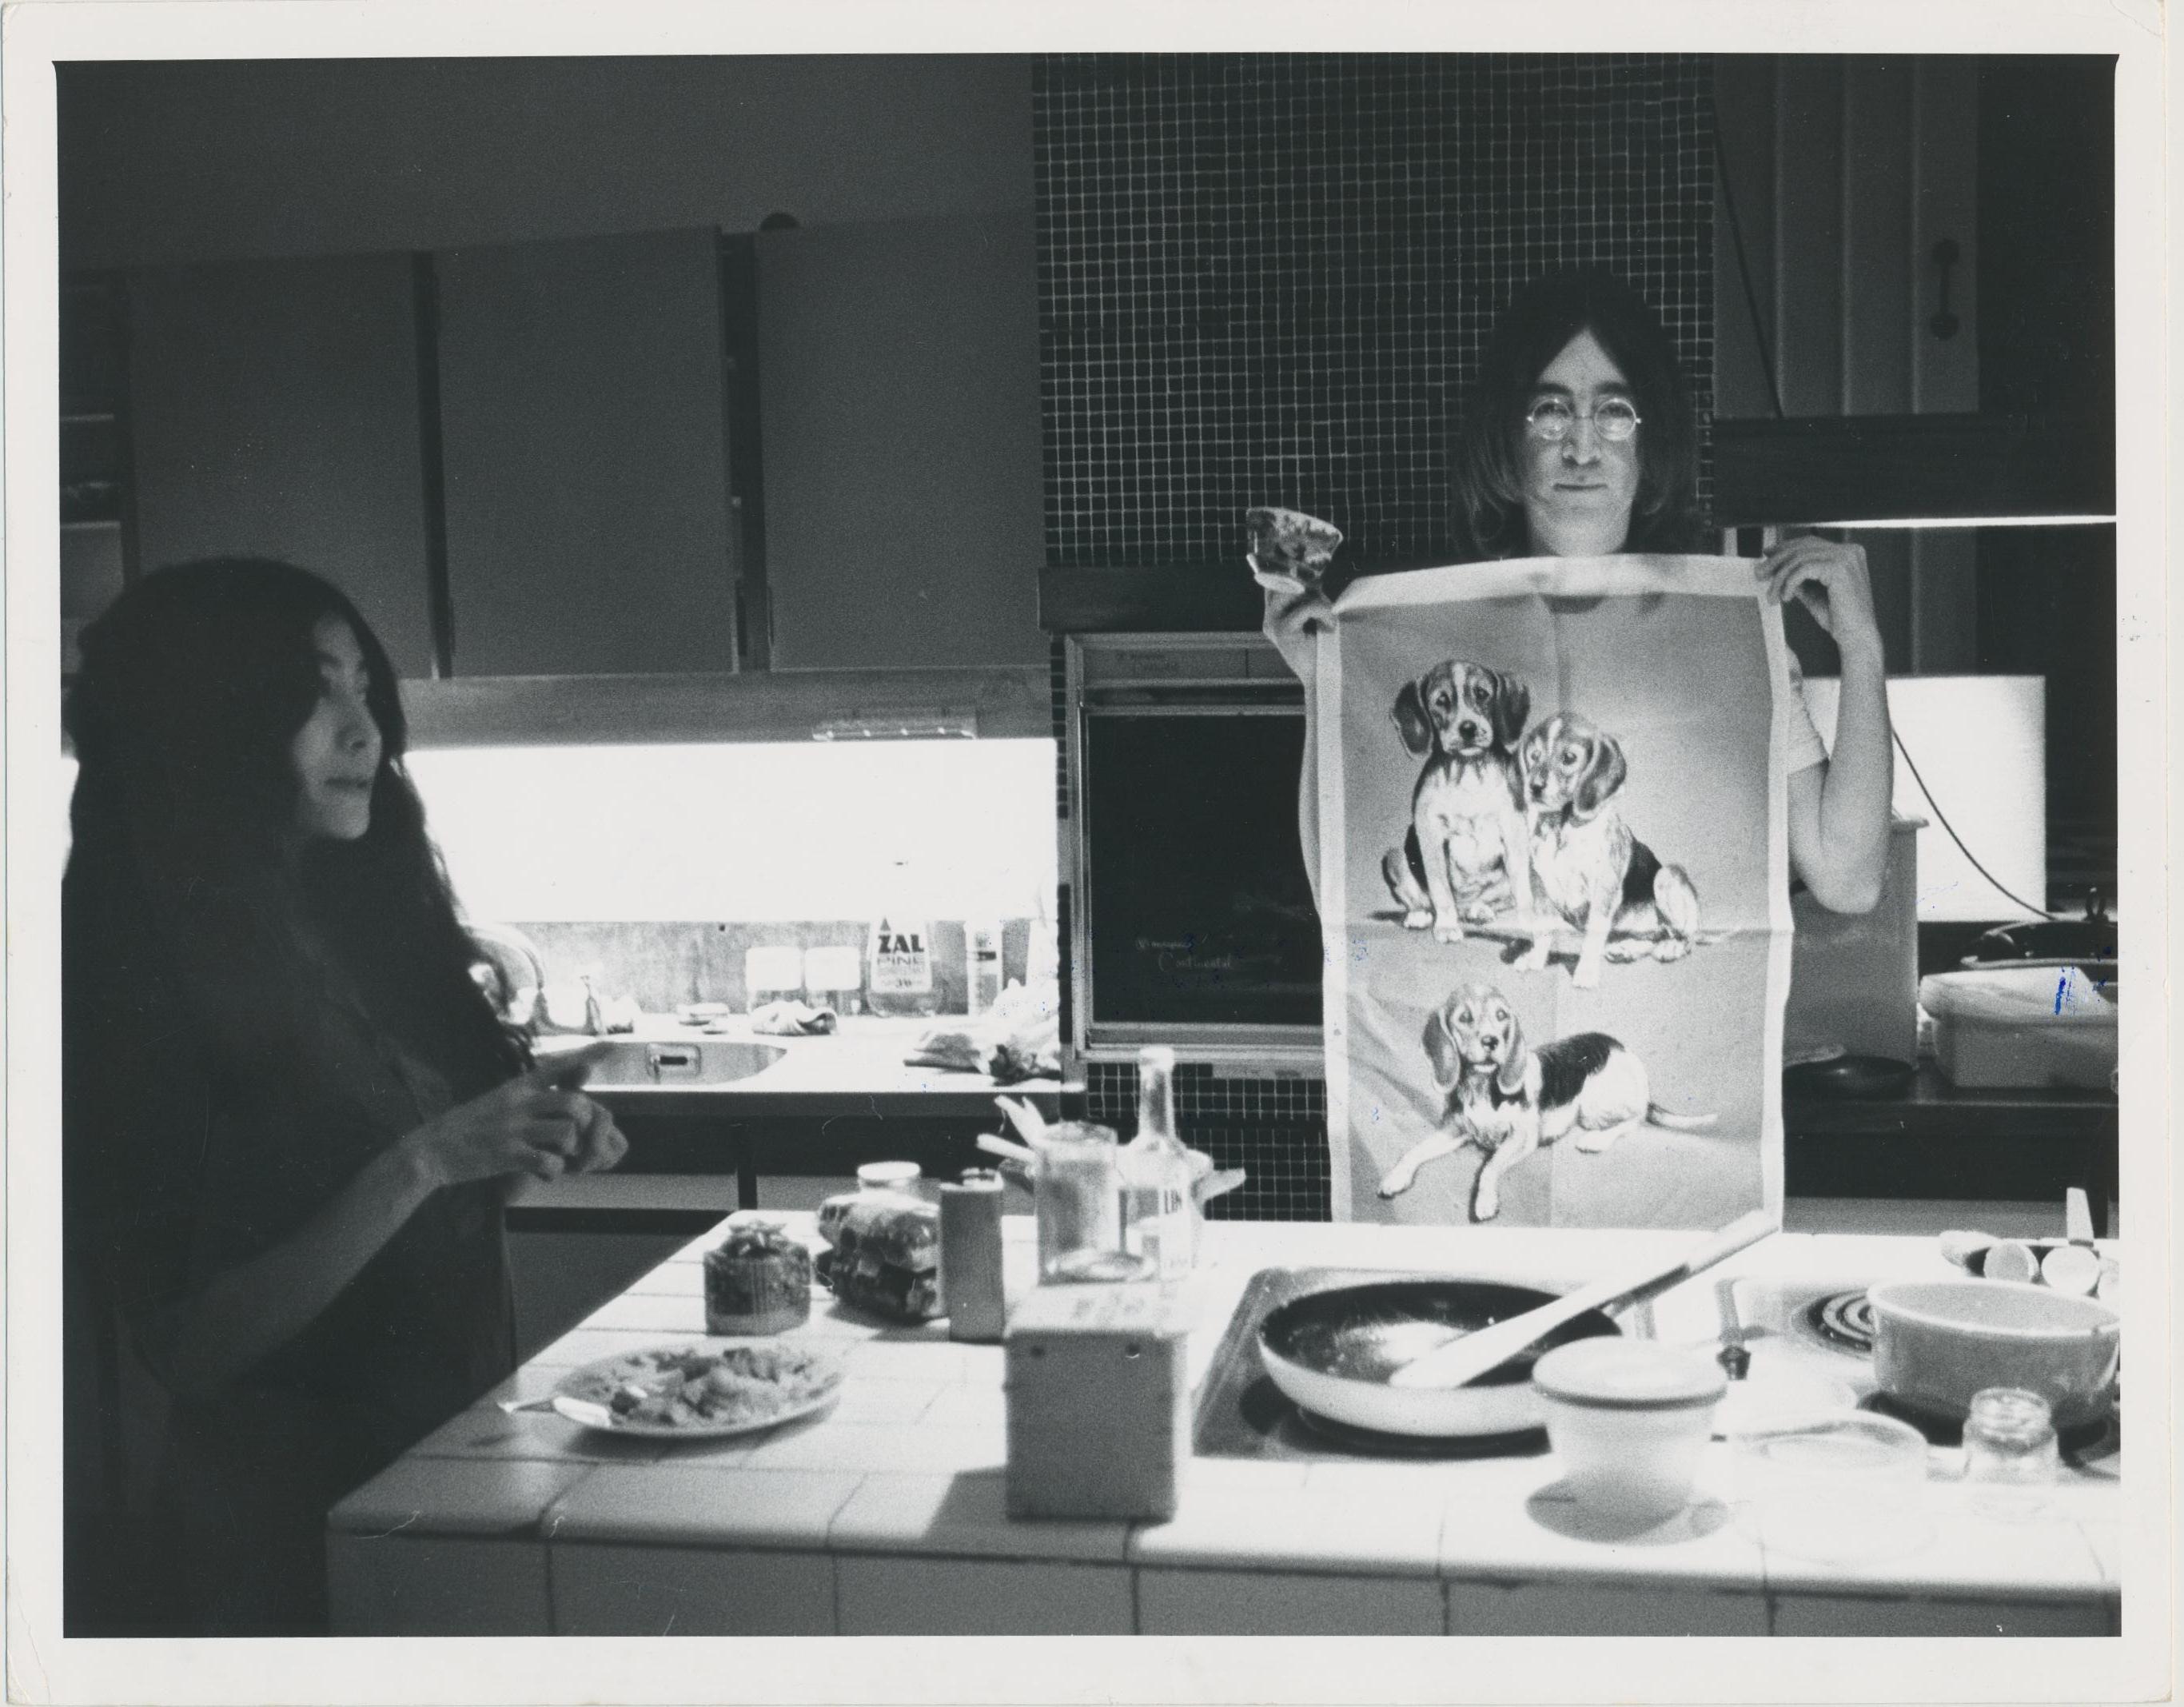 Unknown Portrait Photograph - John Lennon and Yoko Ono, Black and White Photography, 1970s, 18, 1 x 22, 8 cm